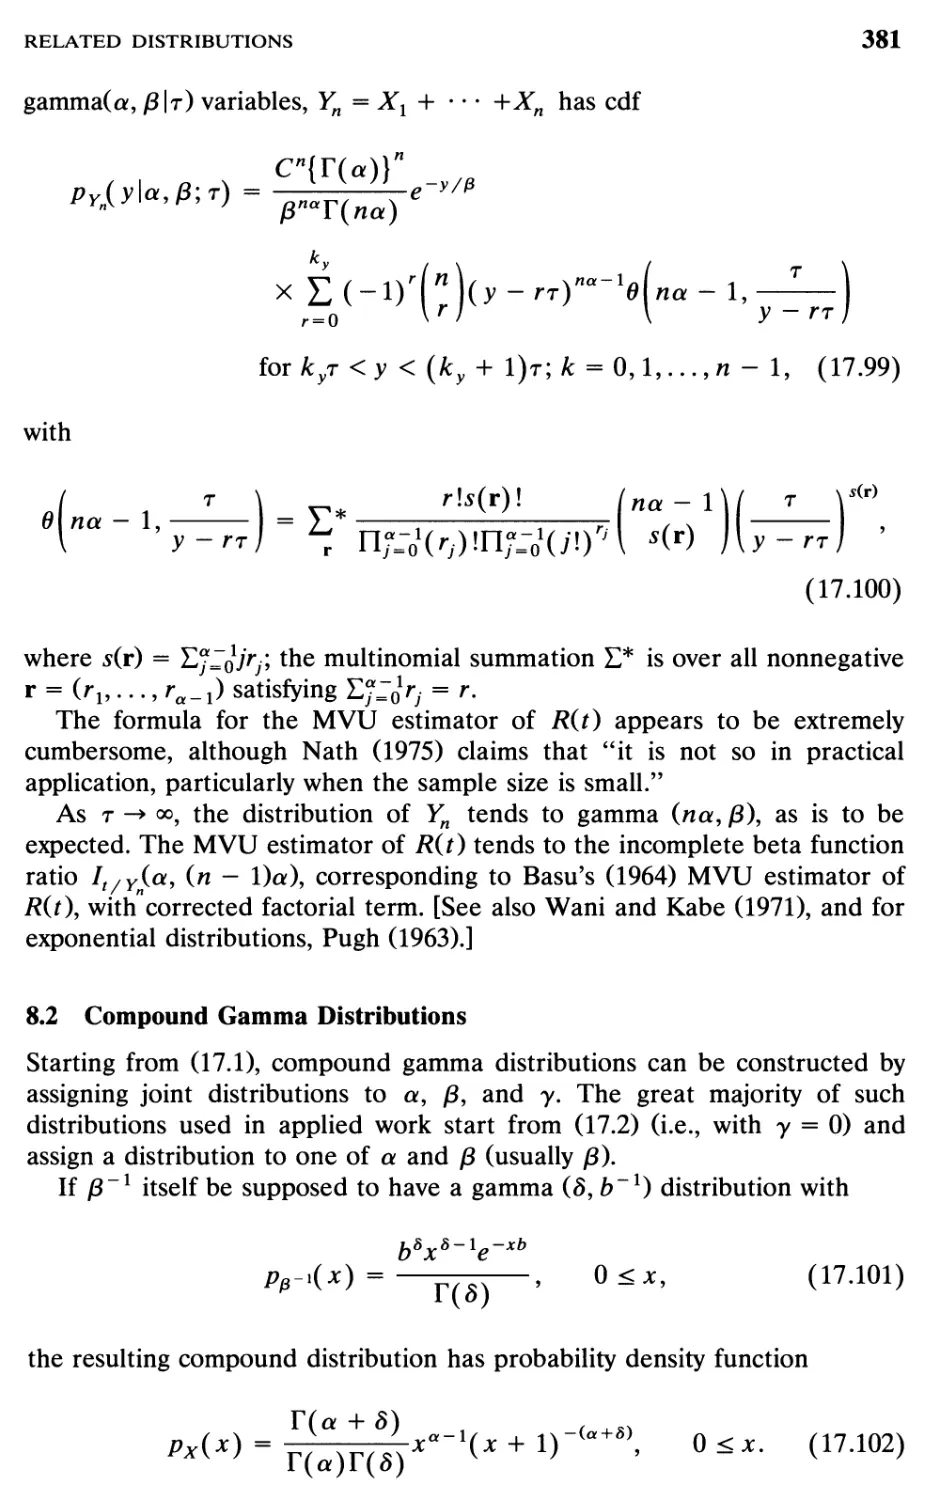 8.2 Compound Gamma Distributions, 381